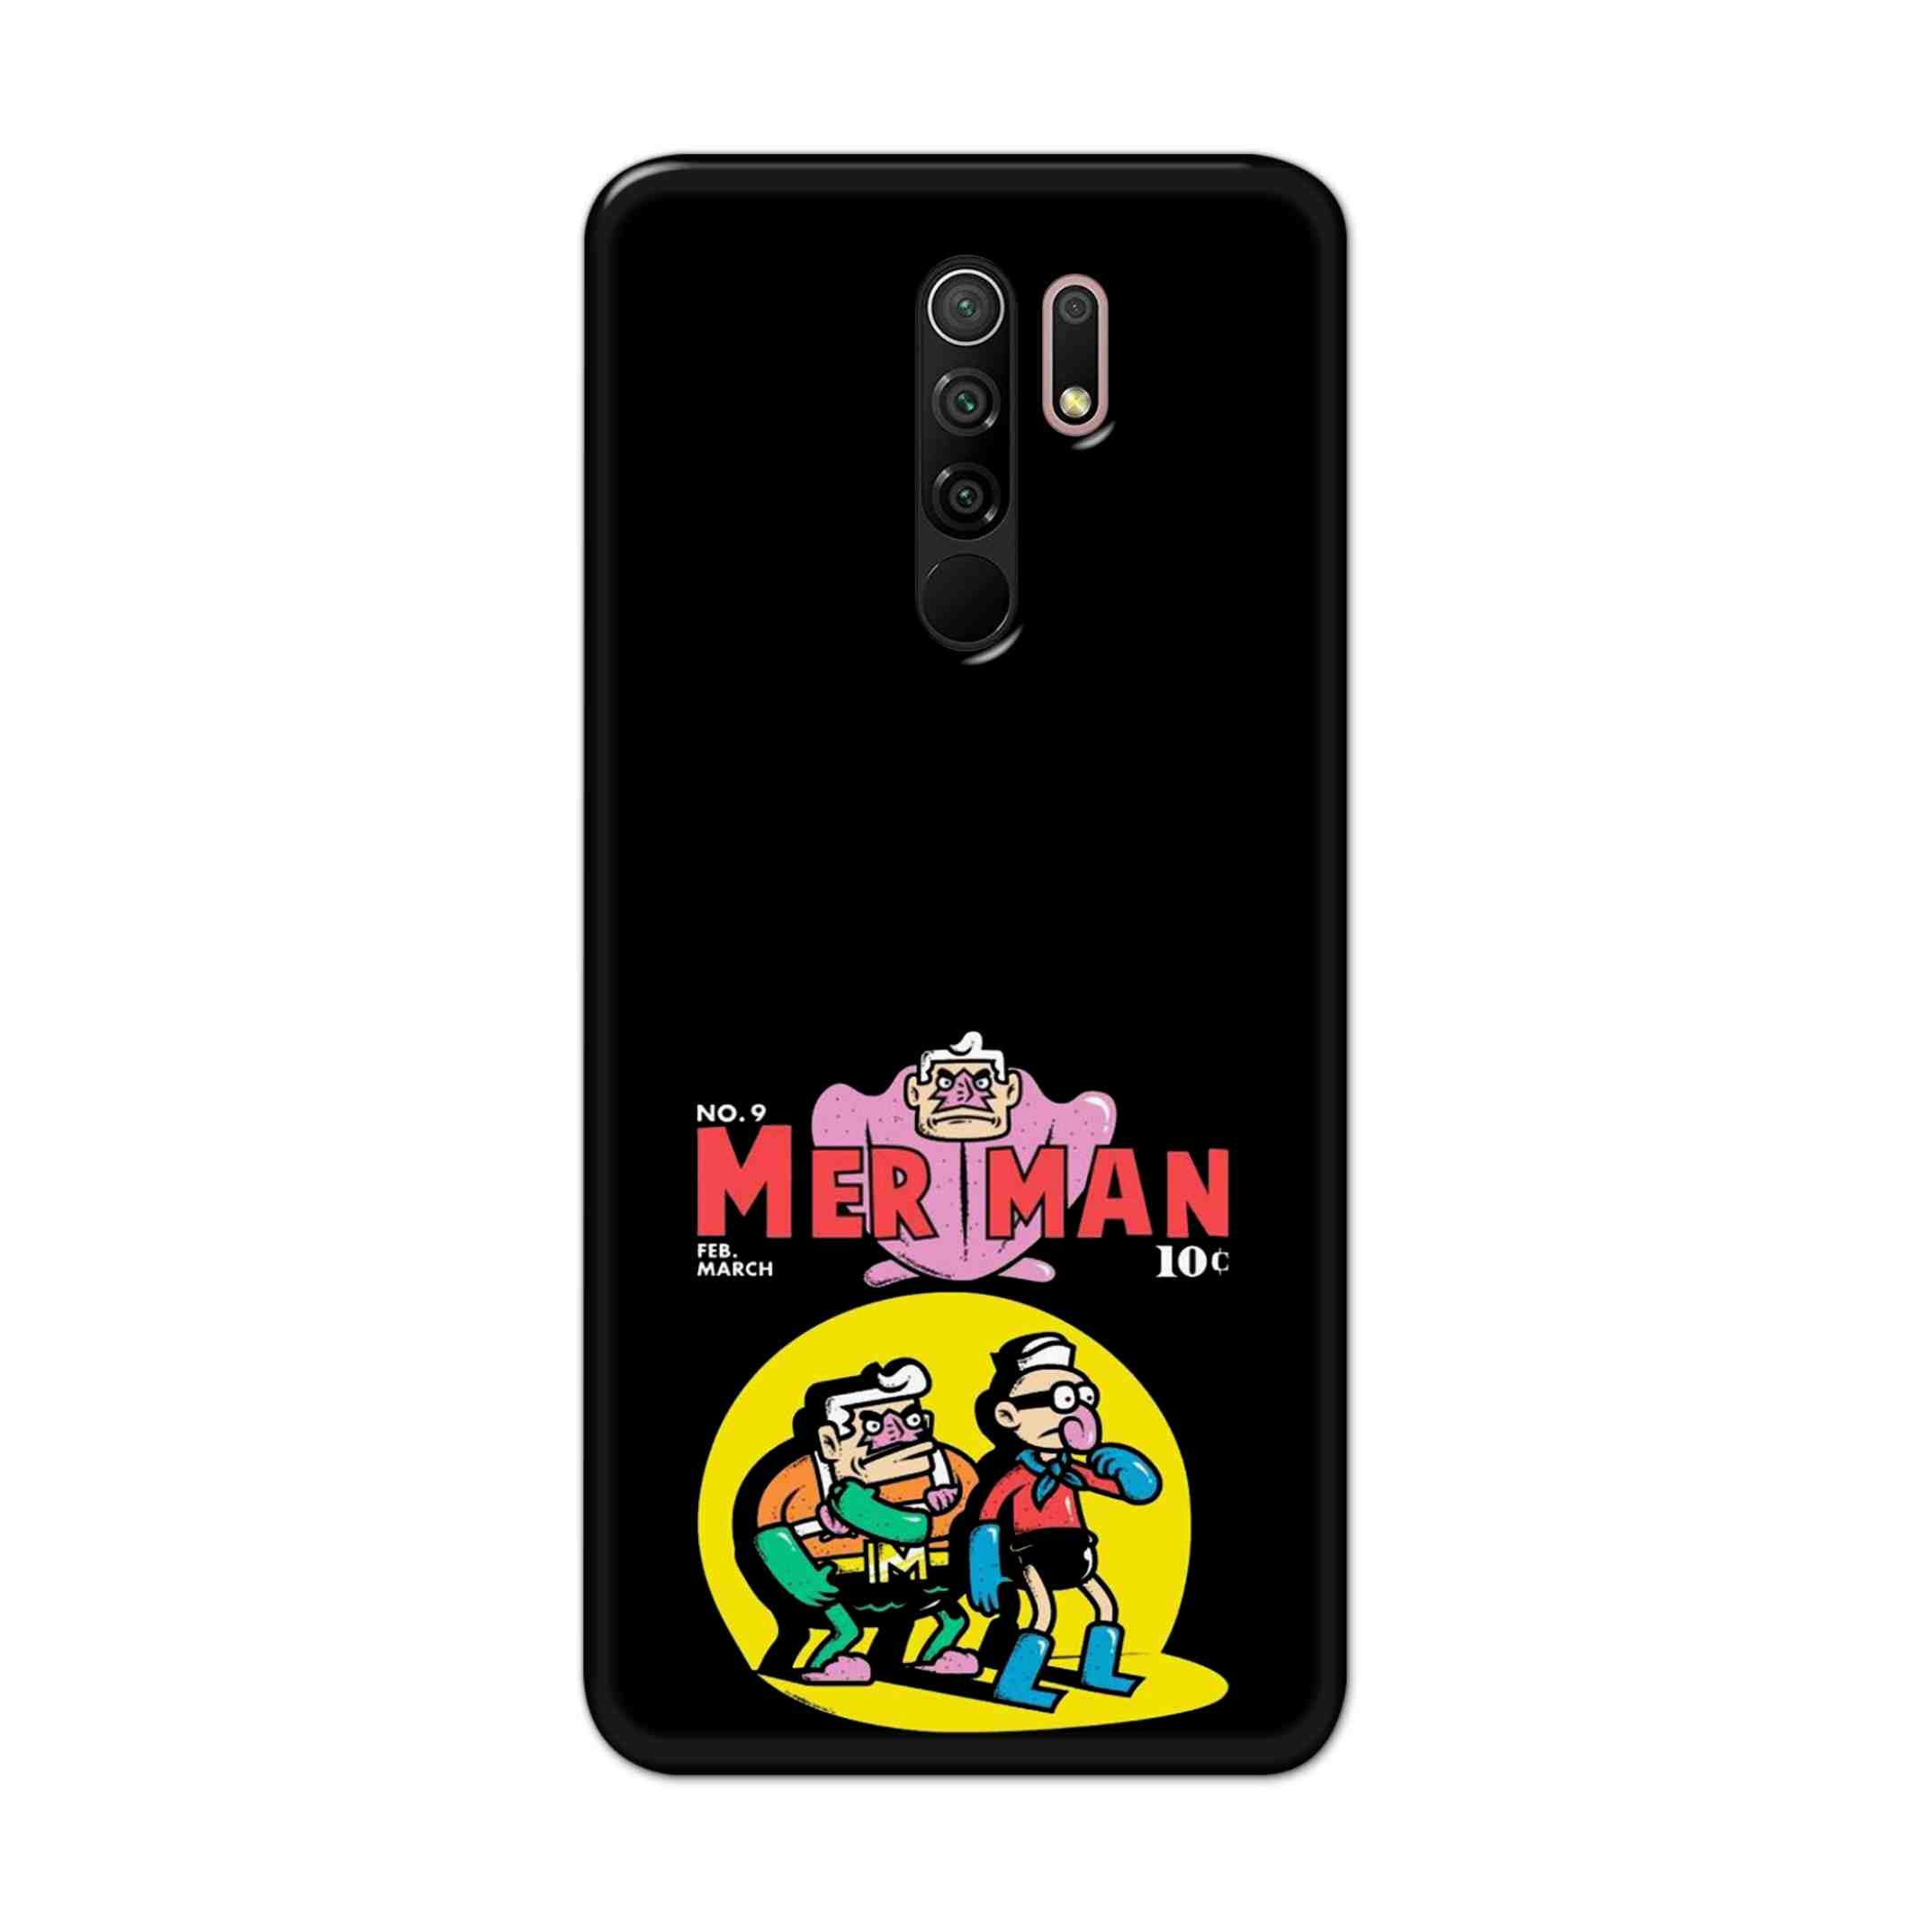 Buy Merman Hard Back Mobile Phone Case Cover For Xiaomi Redmi 9 Prime Online